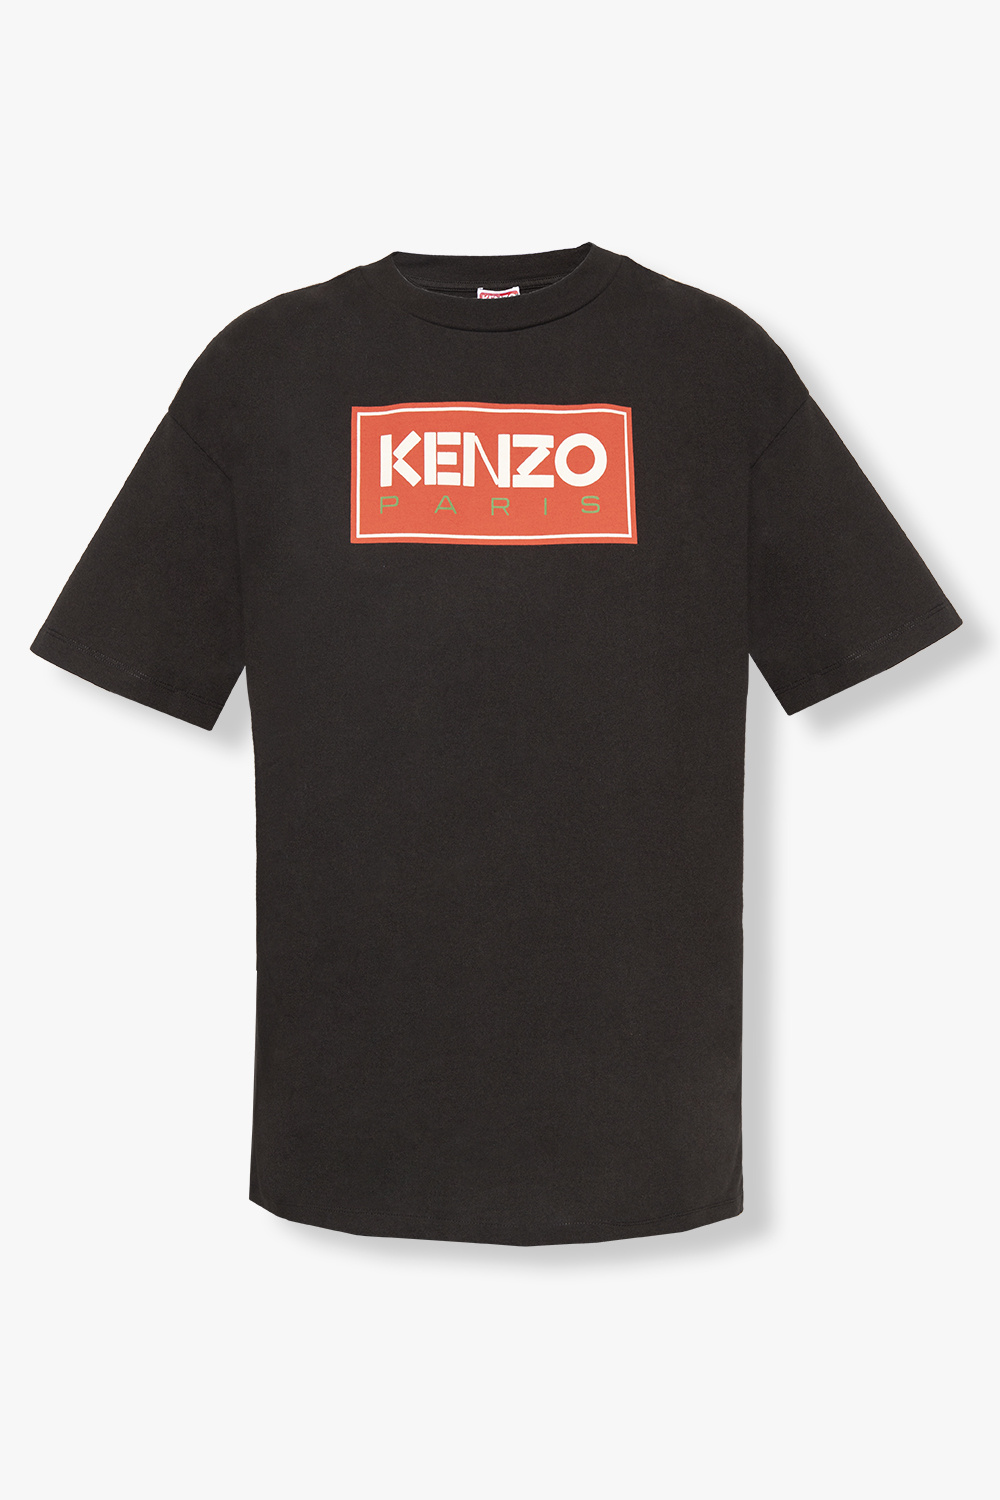 T - T-shirt Napapijri Fenix rosa claro - con inserto Moon Nero Kenzo - IetpShops Germany